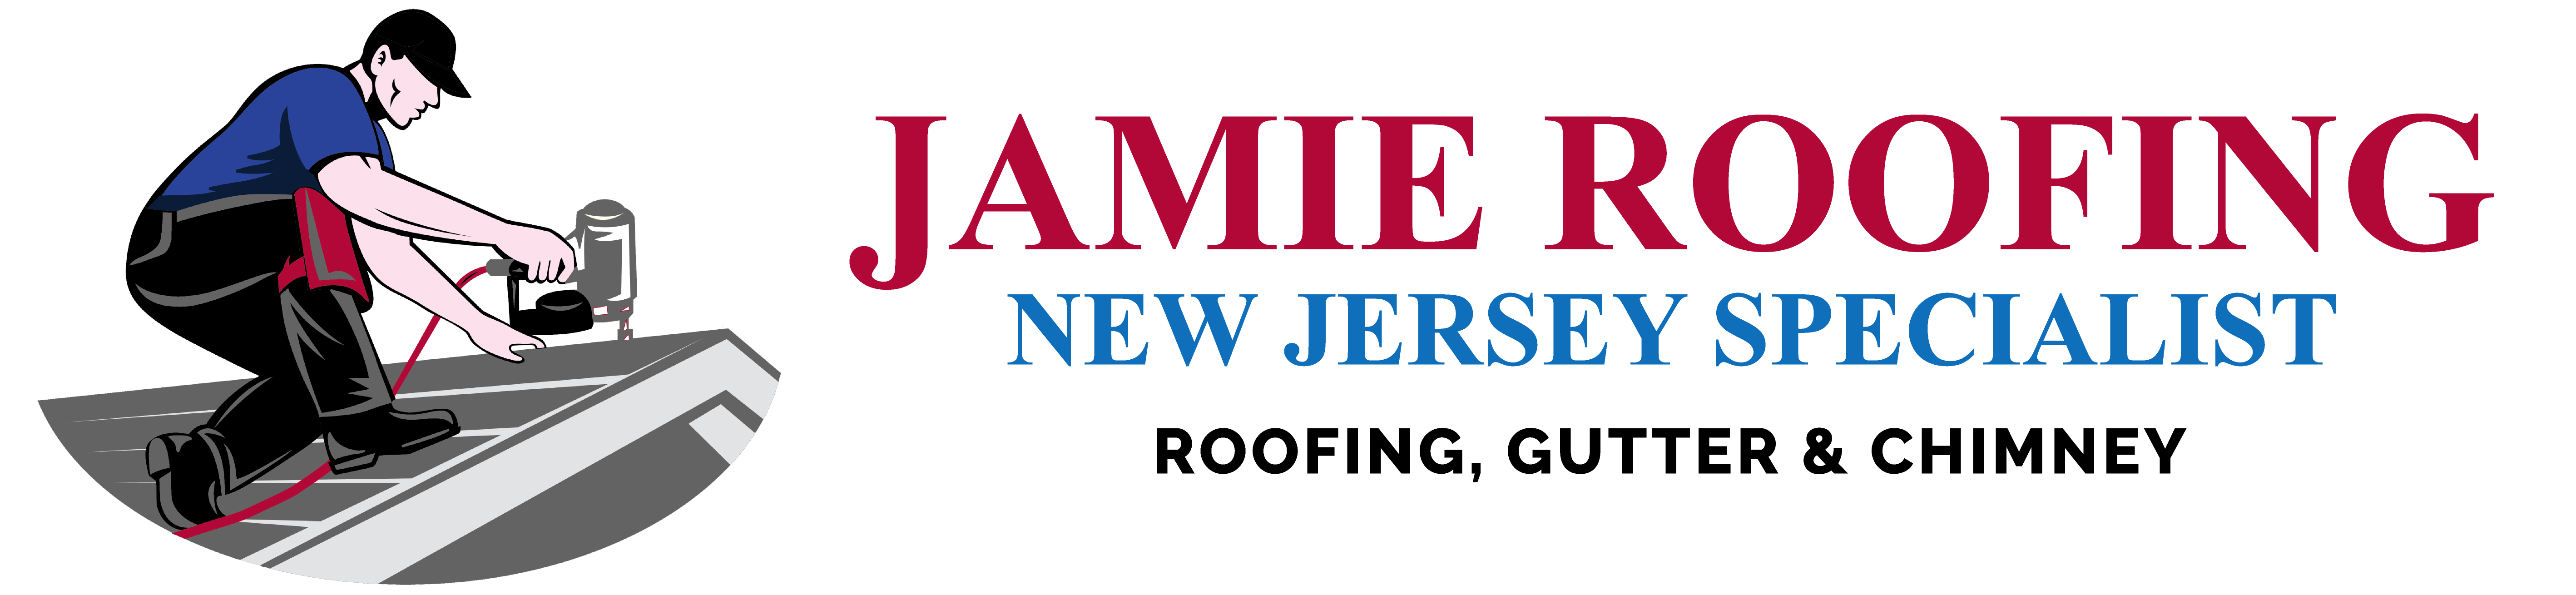 Jamie Roofing New Jersey